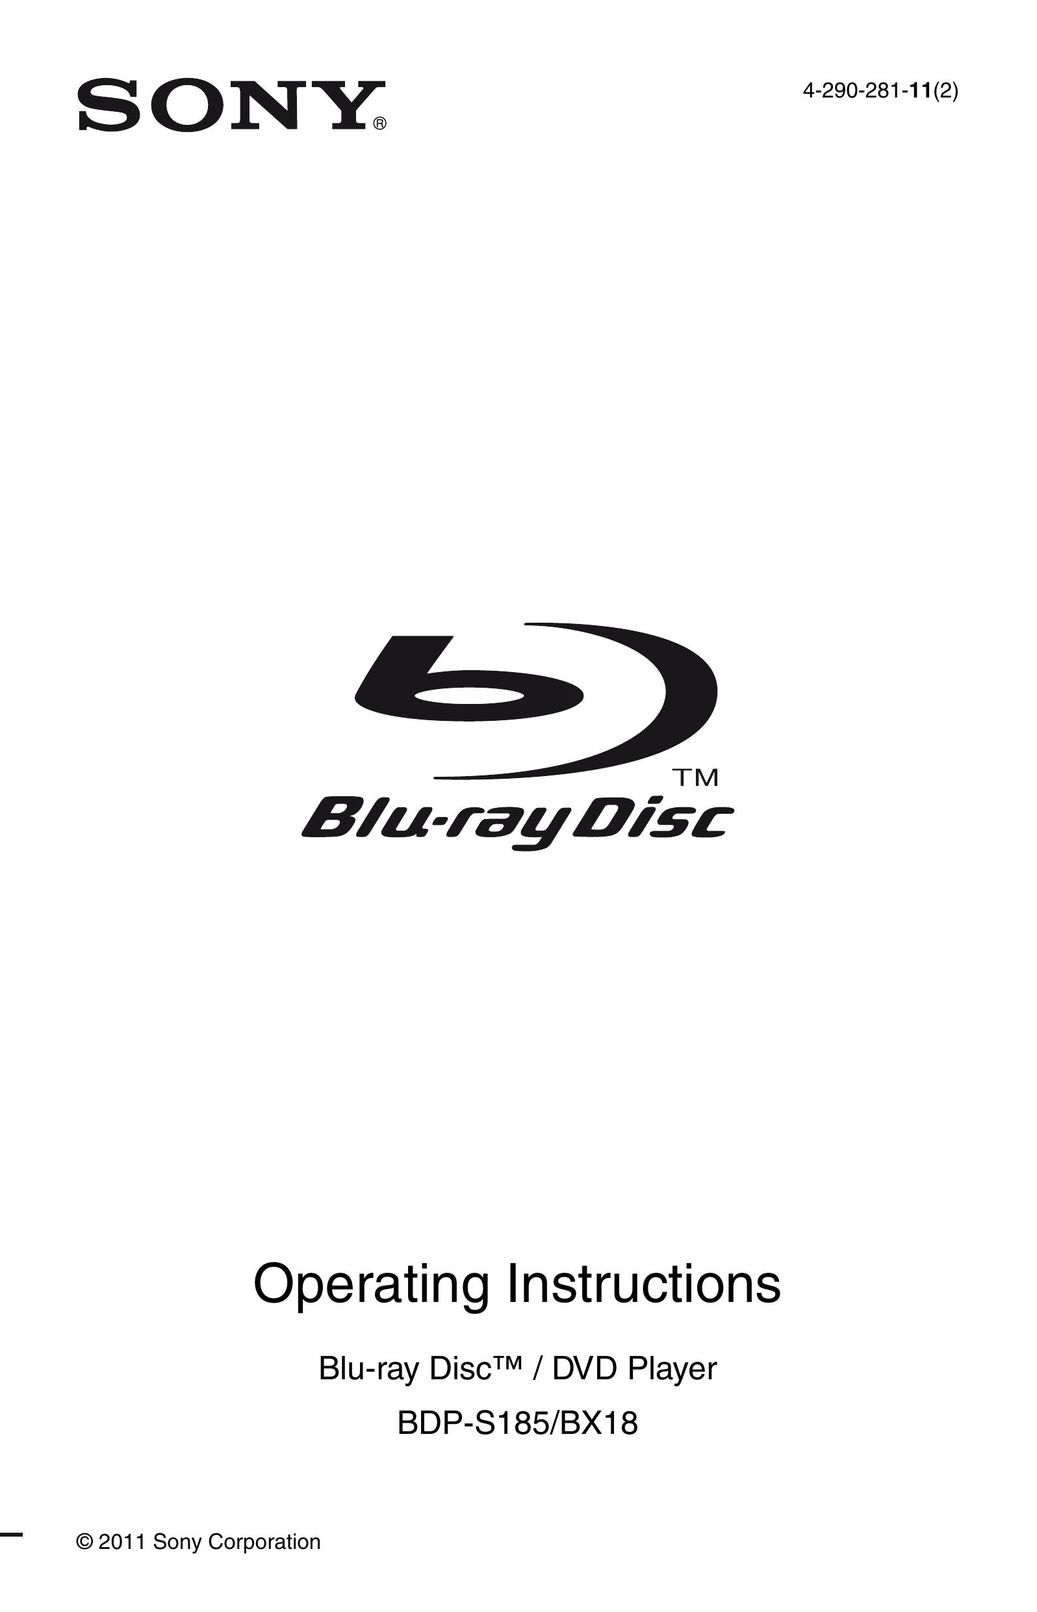 Sony BX18 DVD Player User Manual